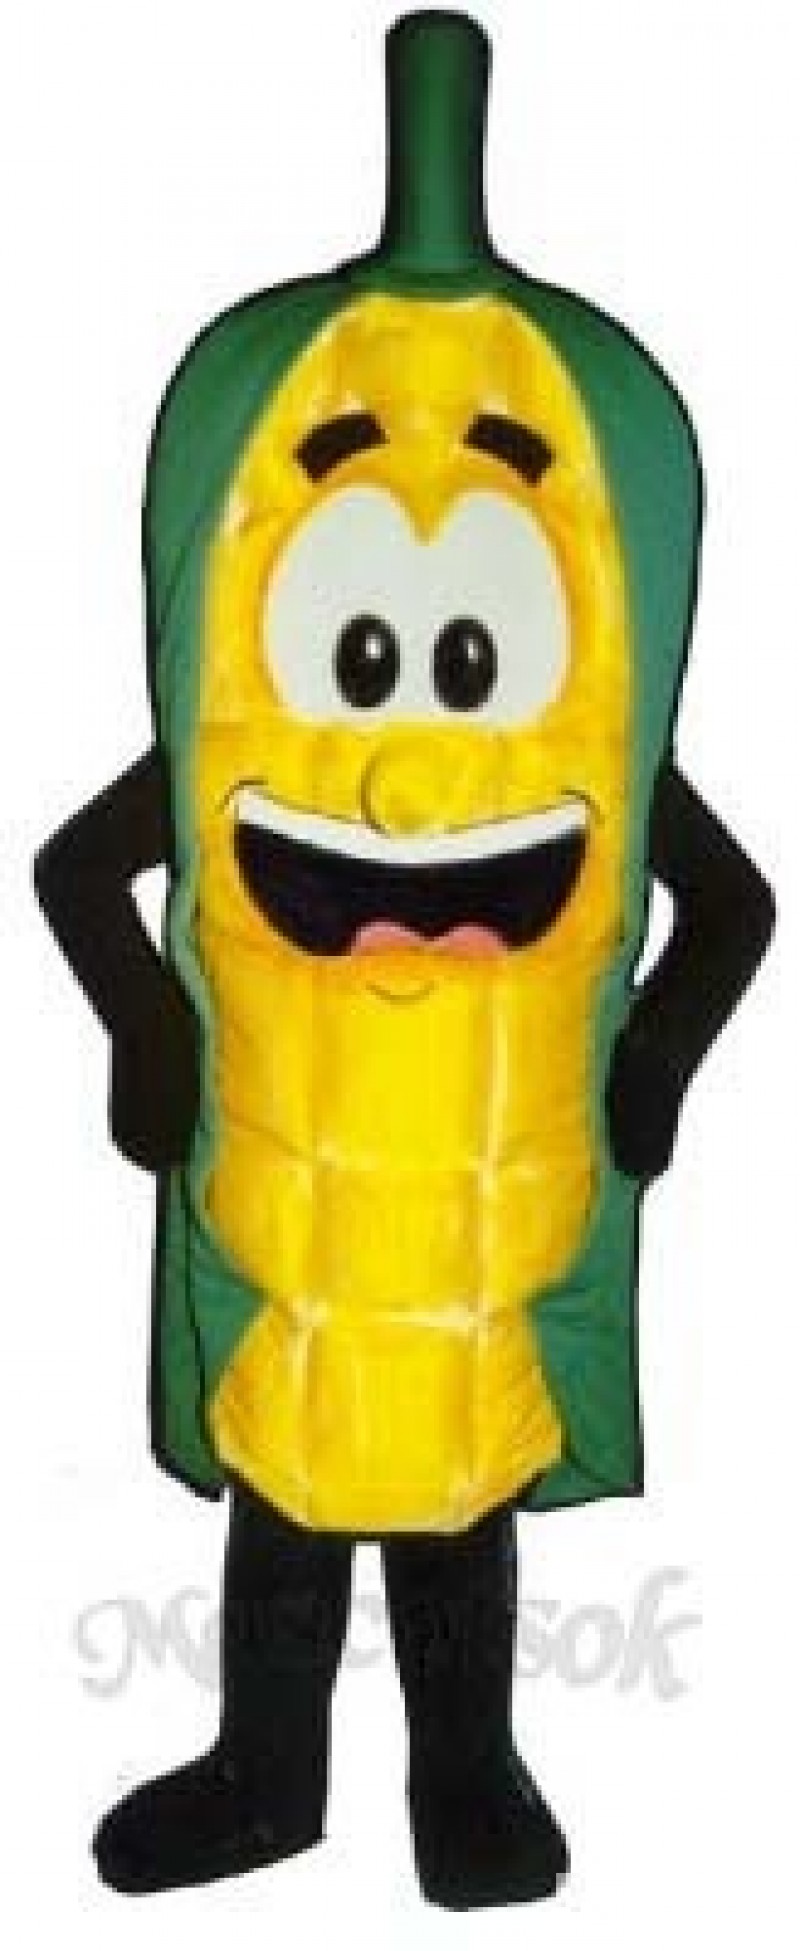 Cornie Corn Mascot Costume